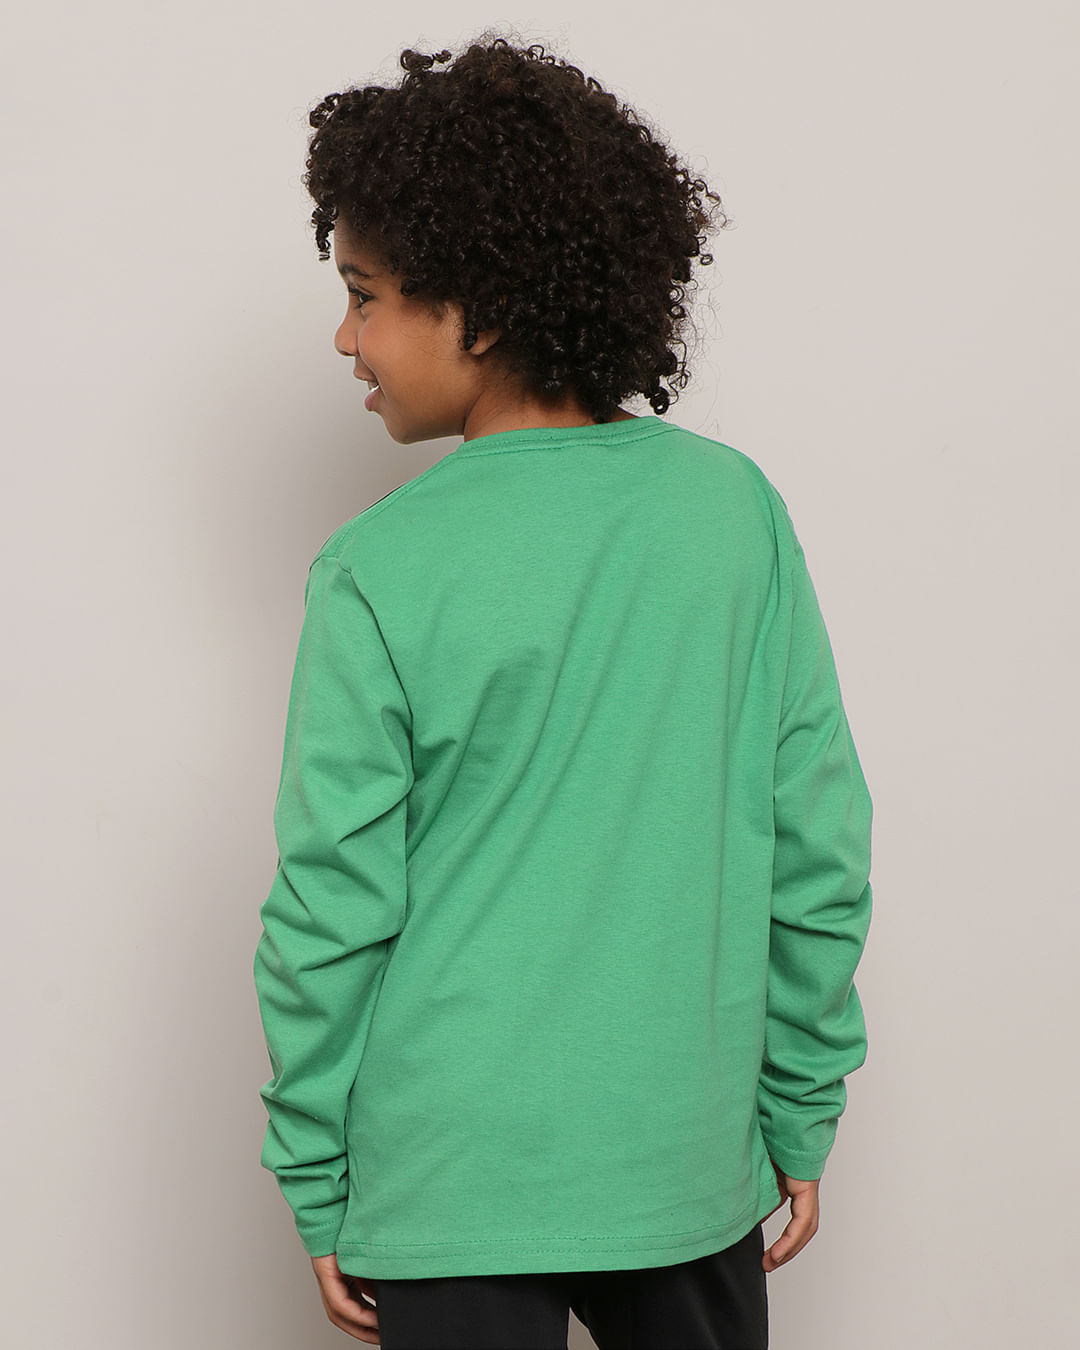 Camiseta-Ch33643-Ml-M410-Hulk---Verde-Medio